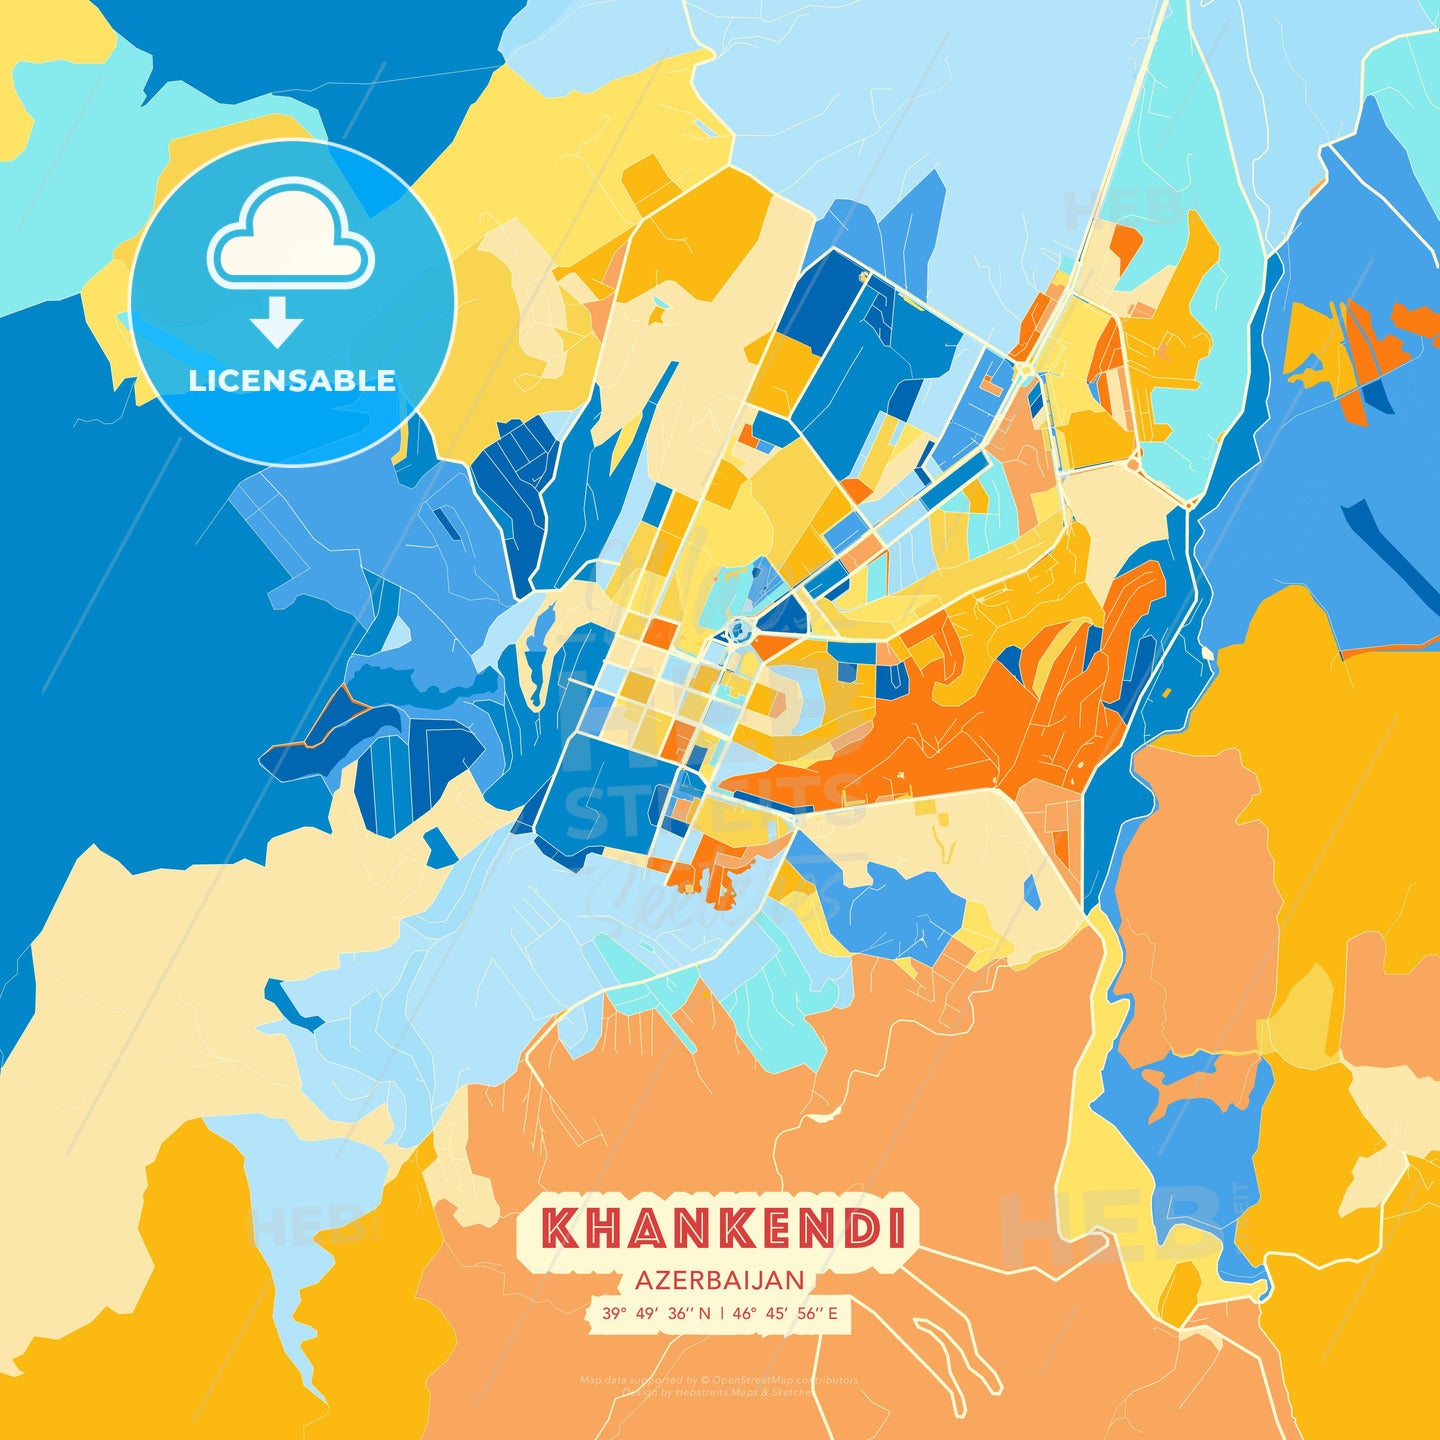 Khankendi, Azerbaijan, map - HEBSTREITS Sketches